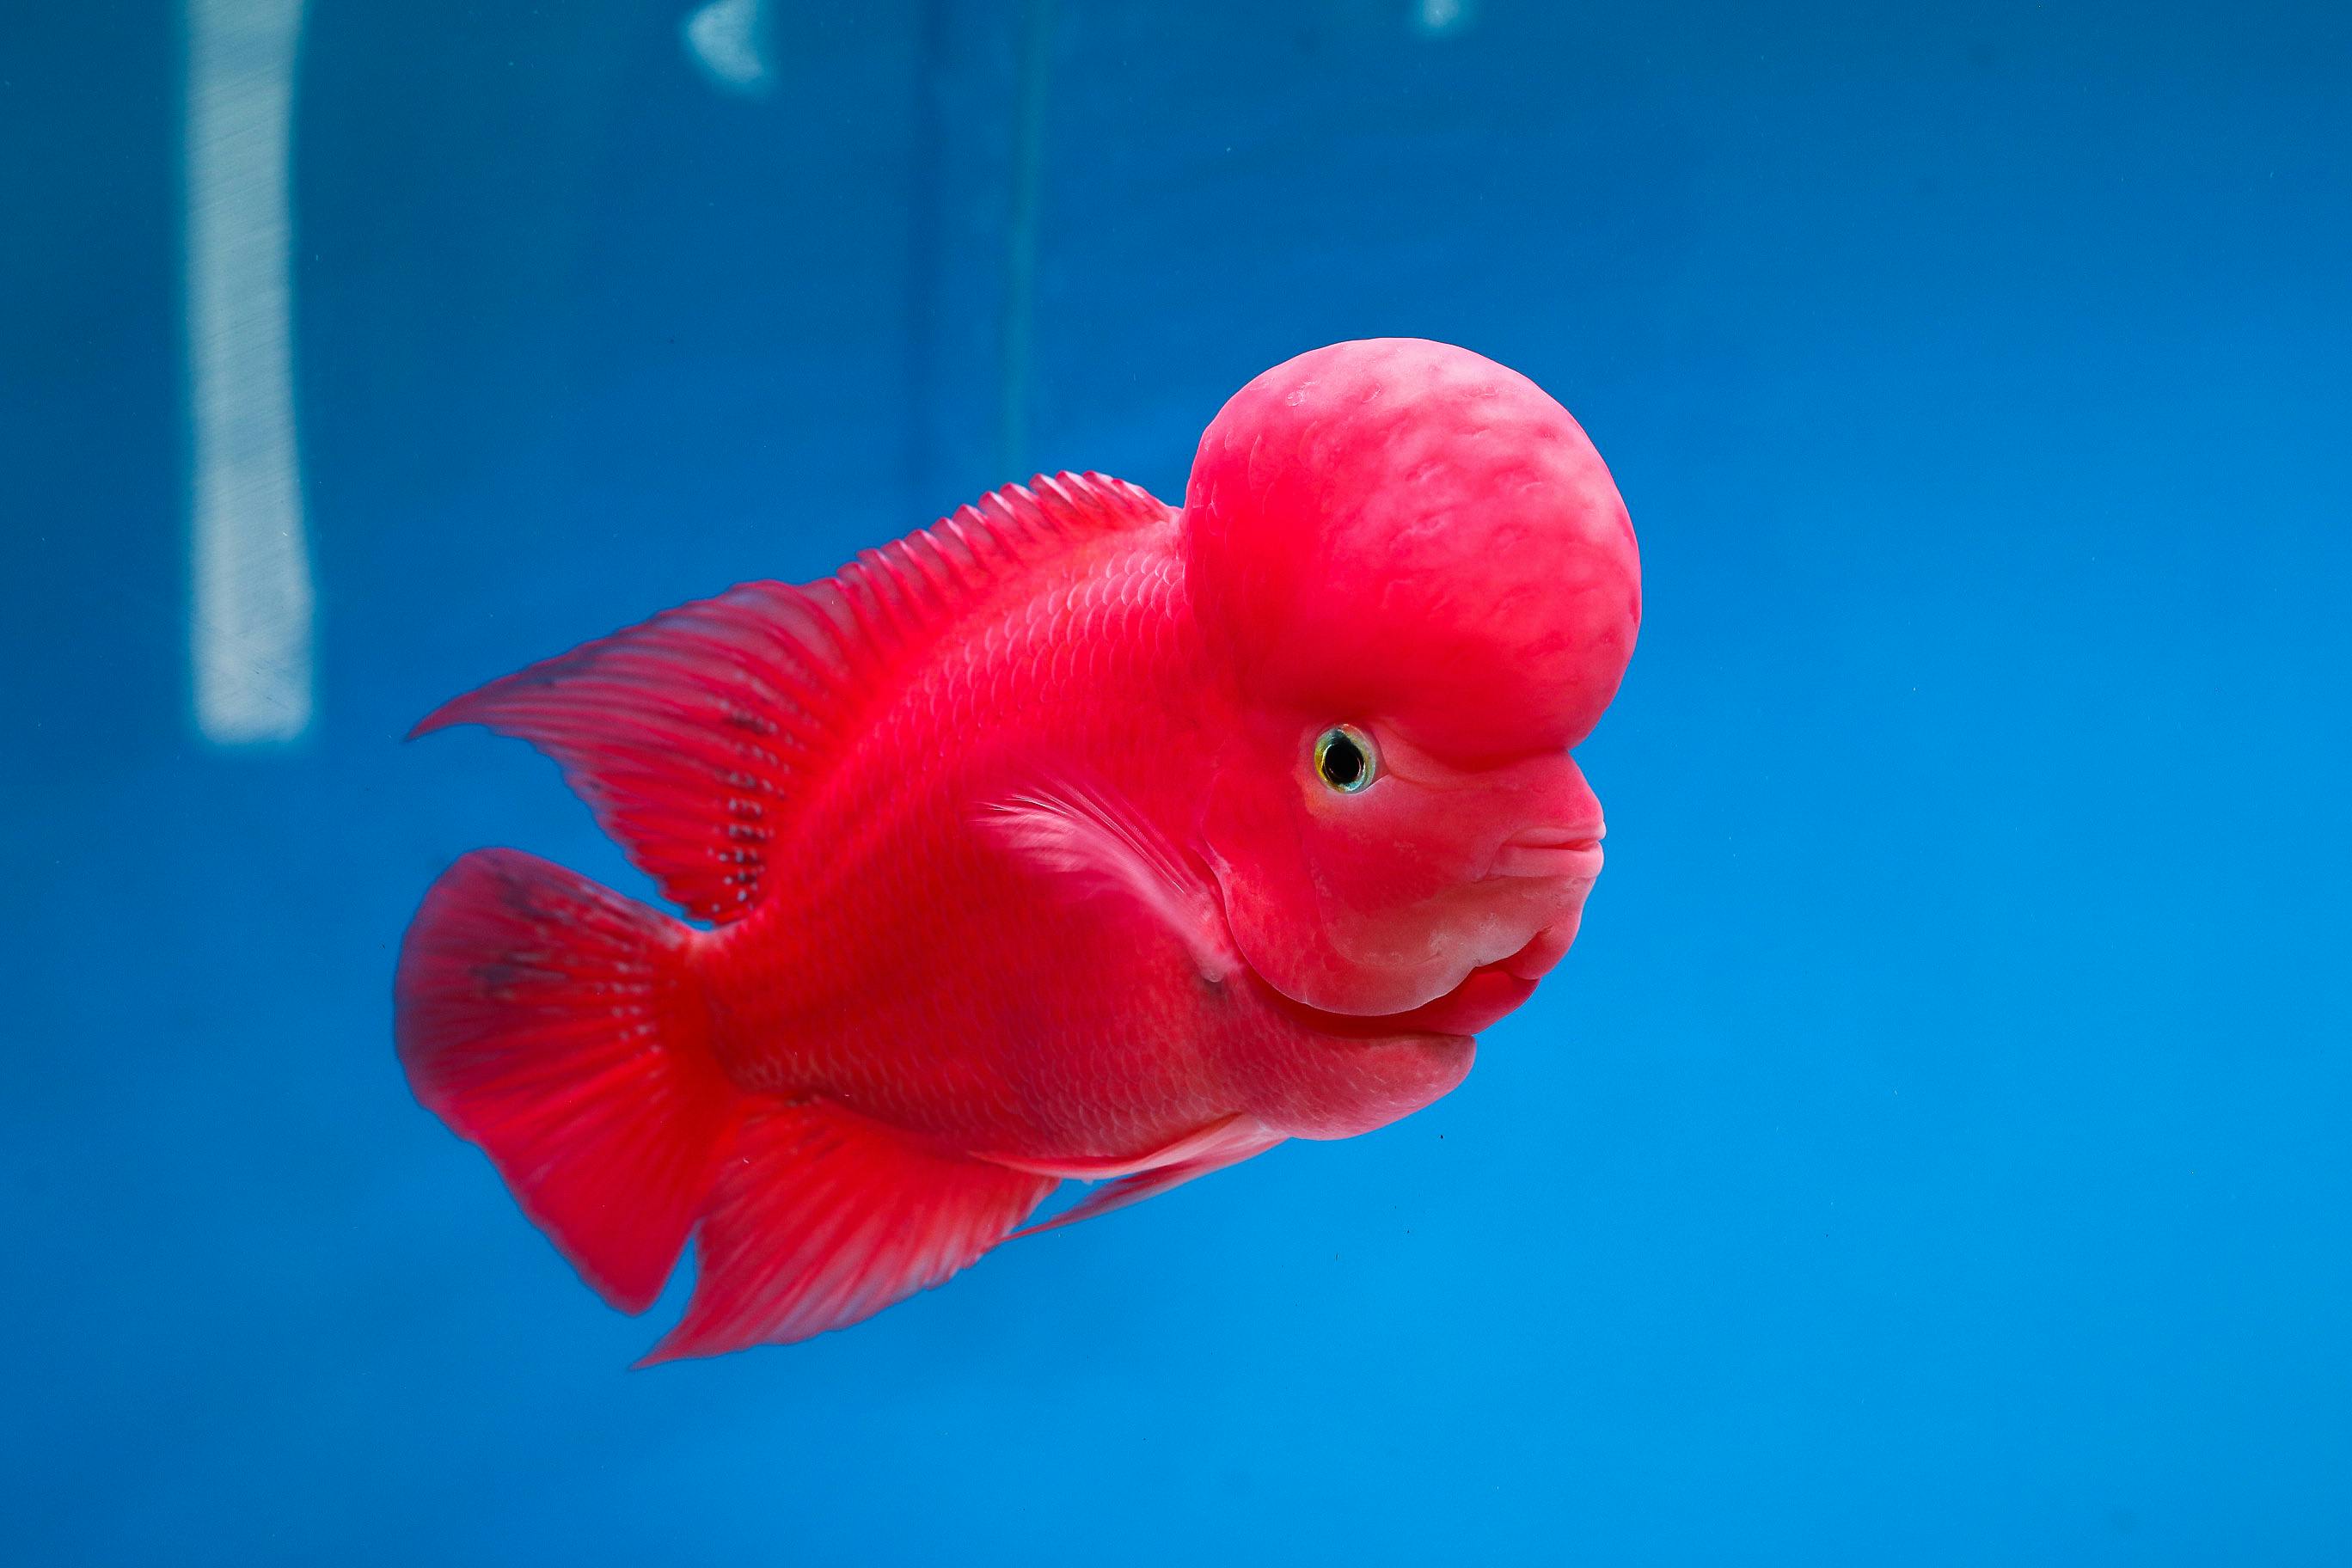 Super Red Monkey Variety of Flowerhorn Cichlid Fish · Free Stock Photo